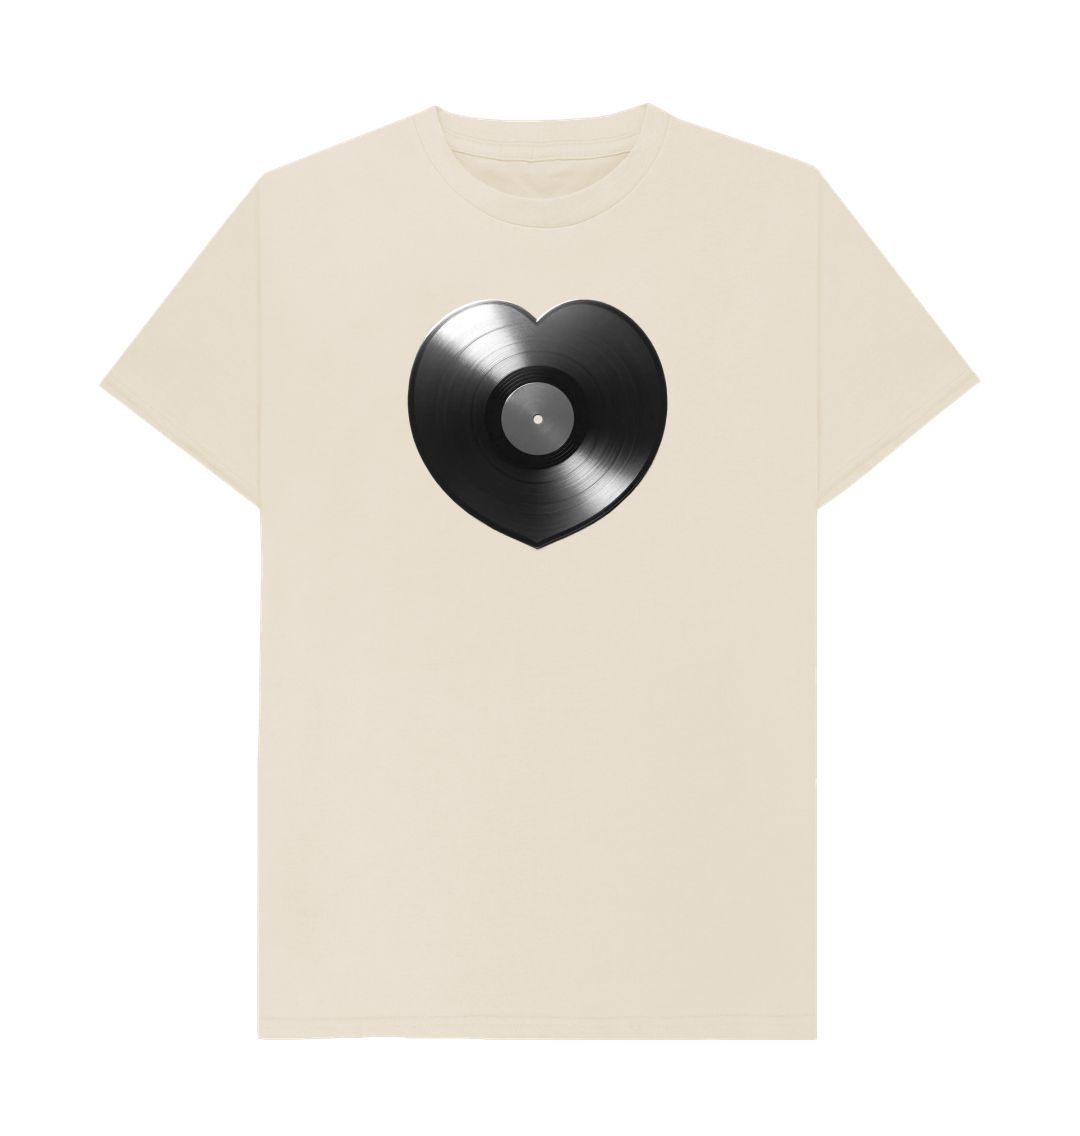 Oat Mens Vinyl Heart T-shirt - Black